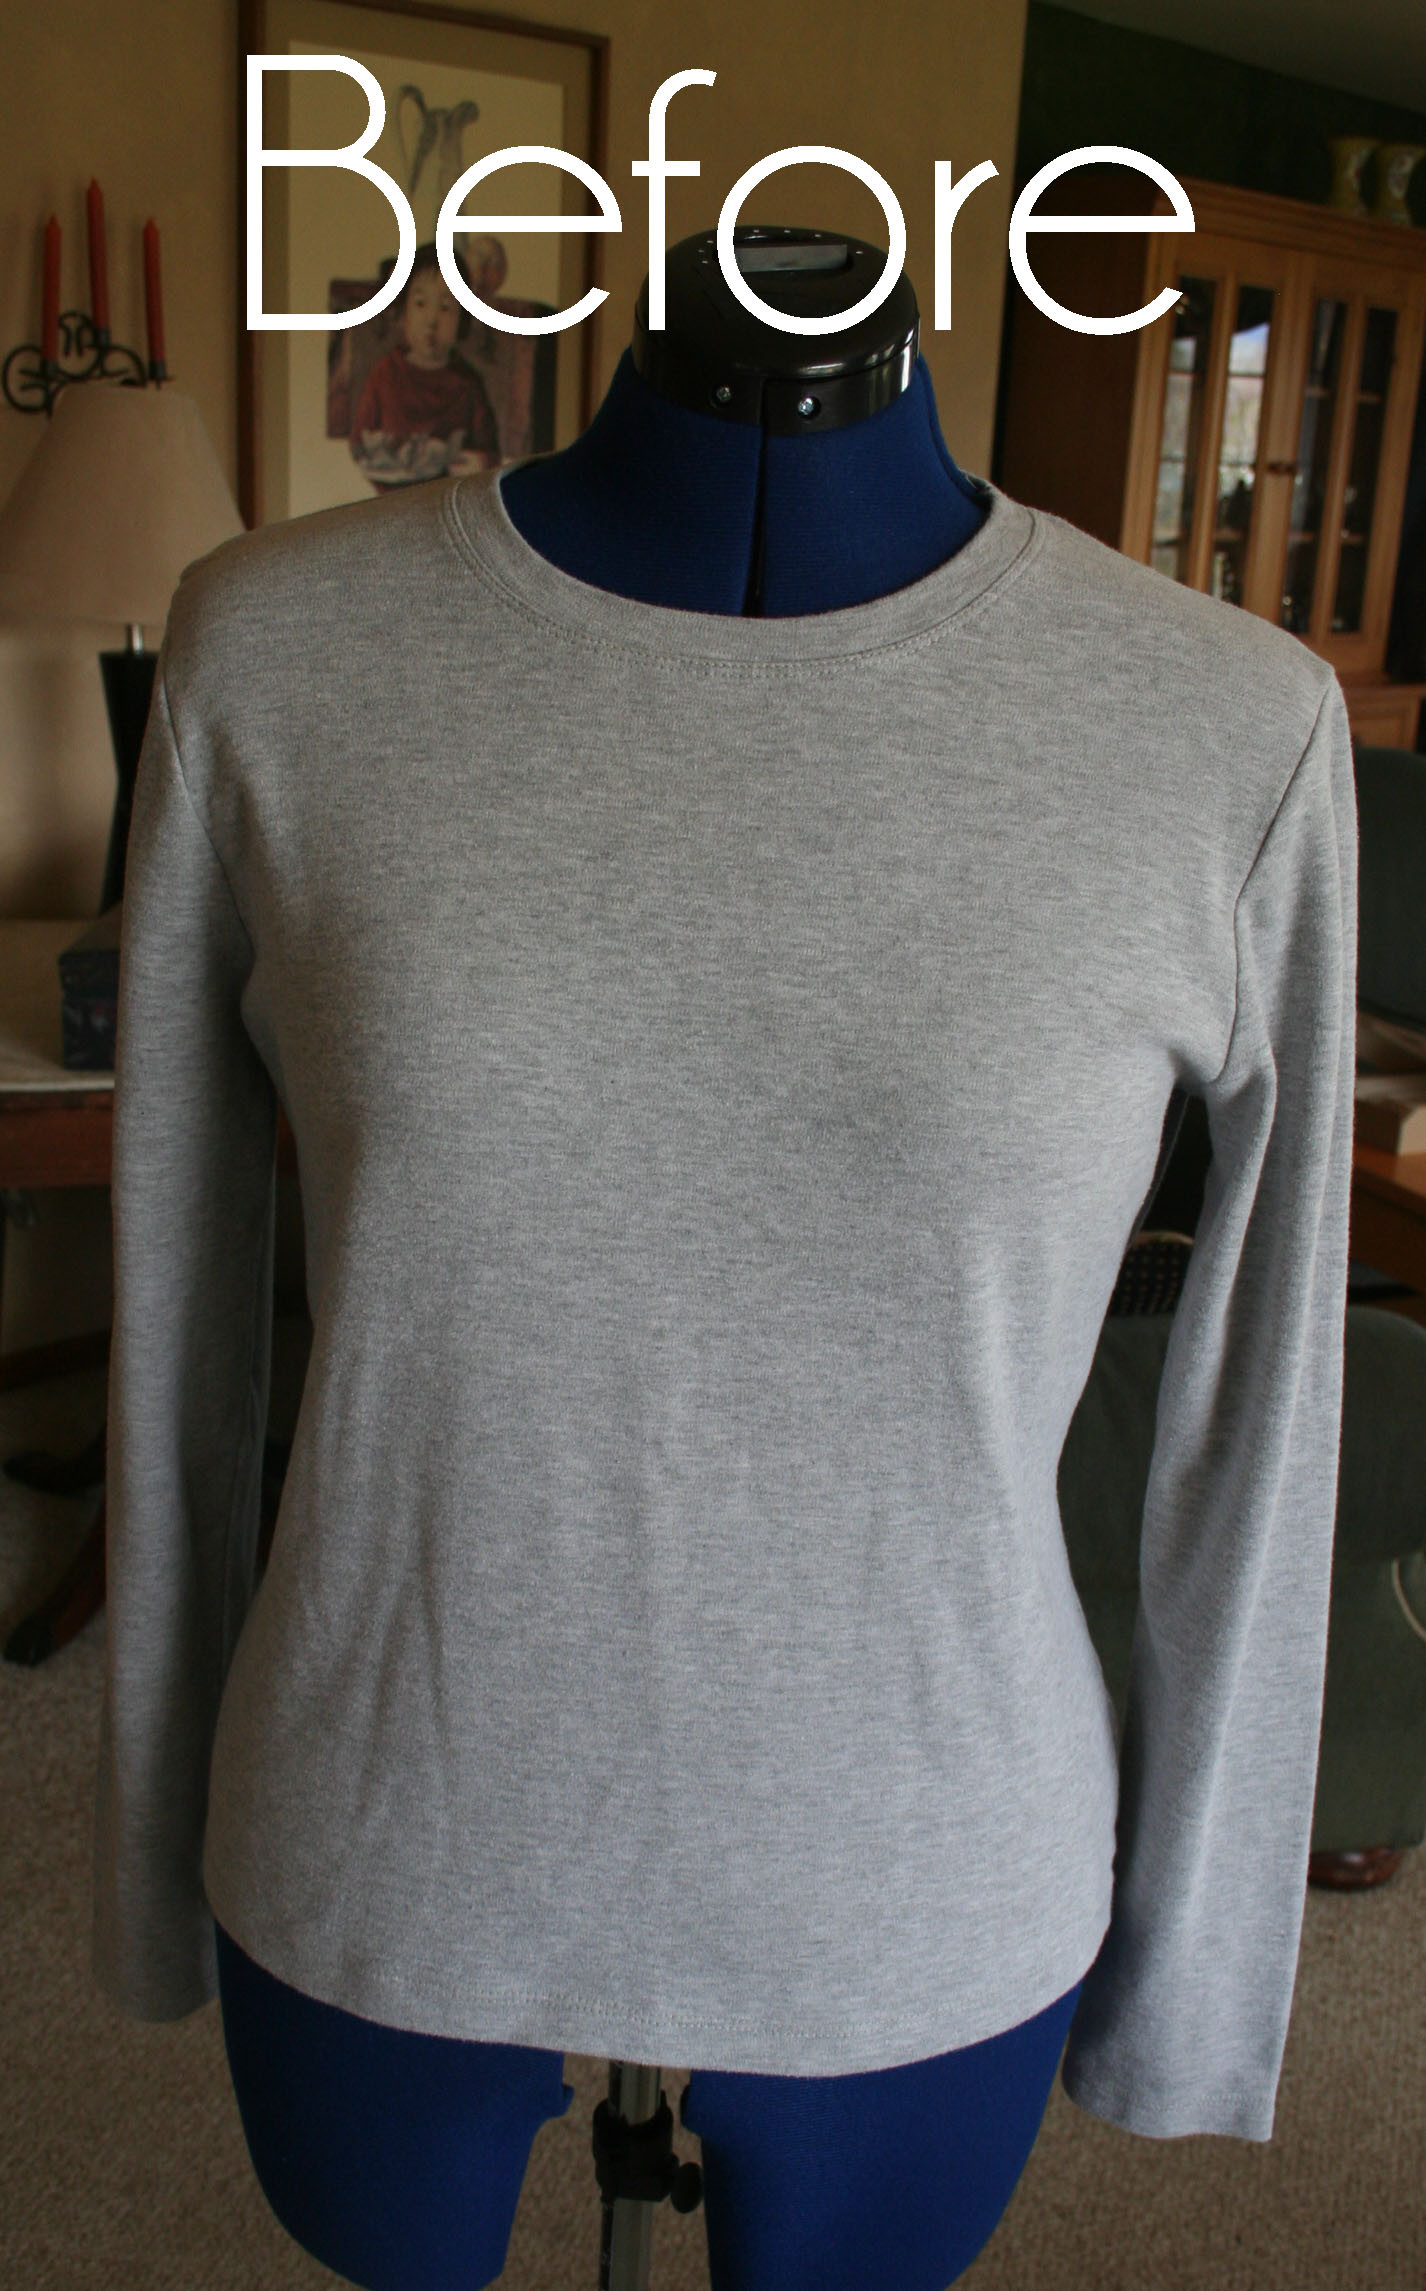 Best ideas about DIY T Shirt
. Save or Pin DIY Ruffled T Shirt Cardigan Tutorial Now.